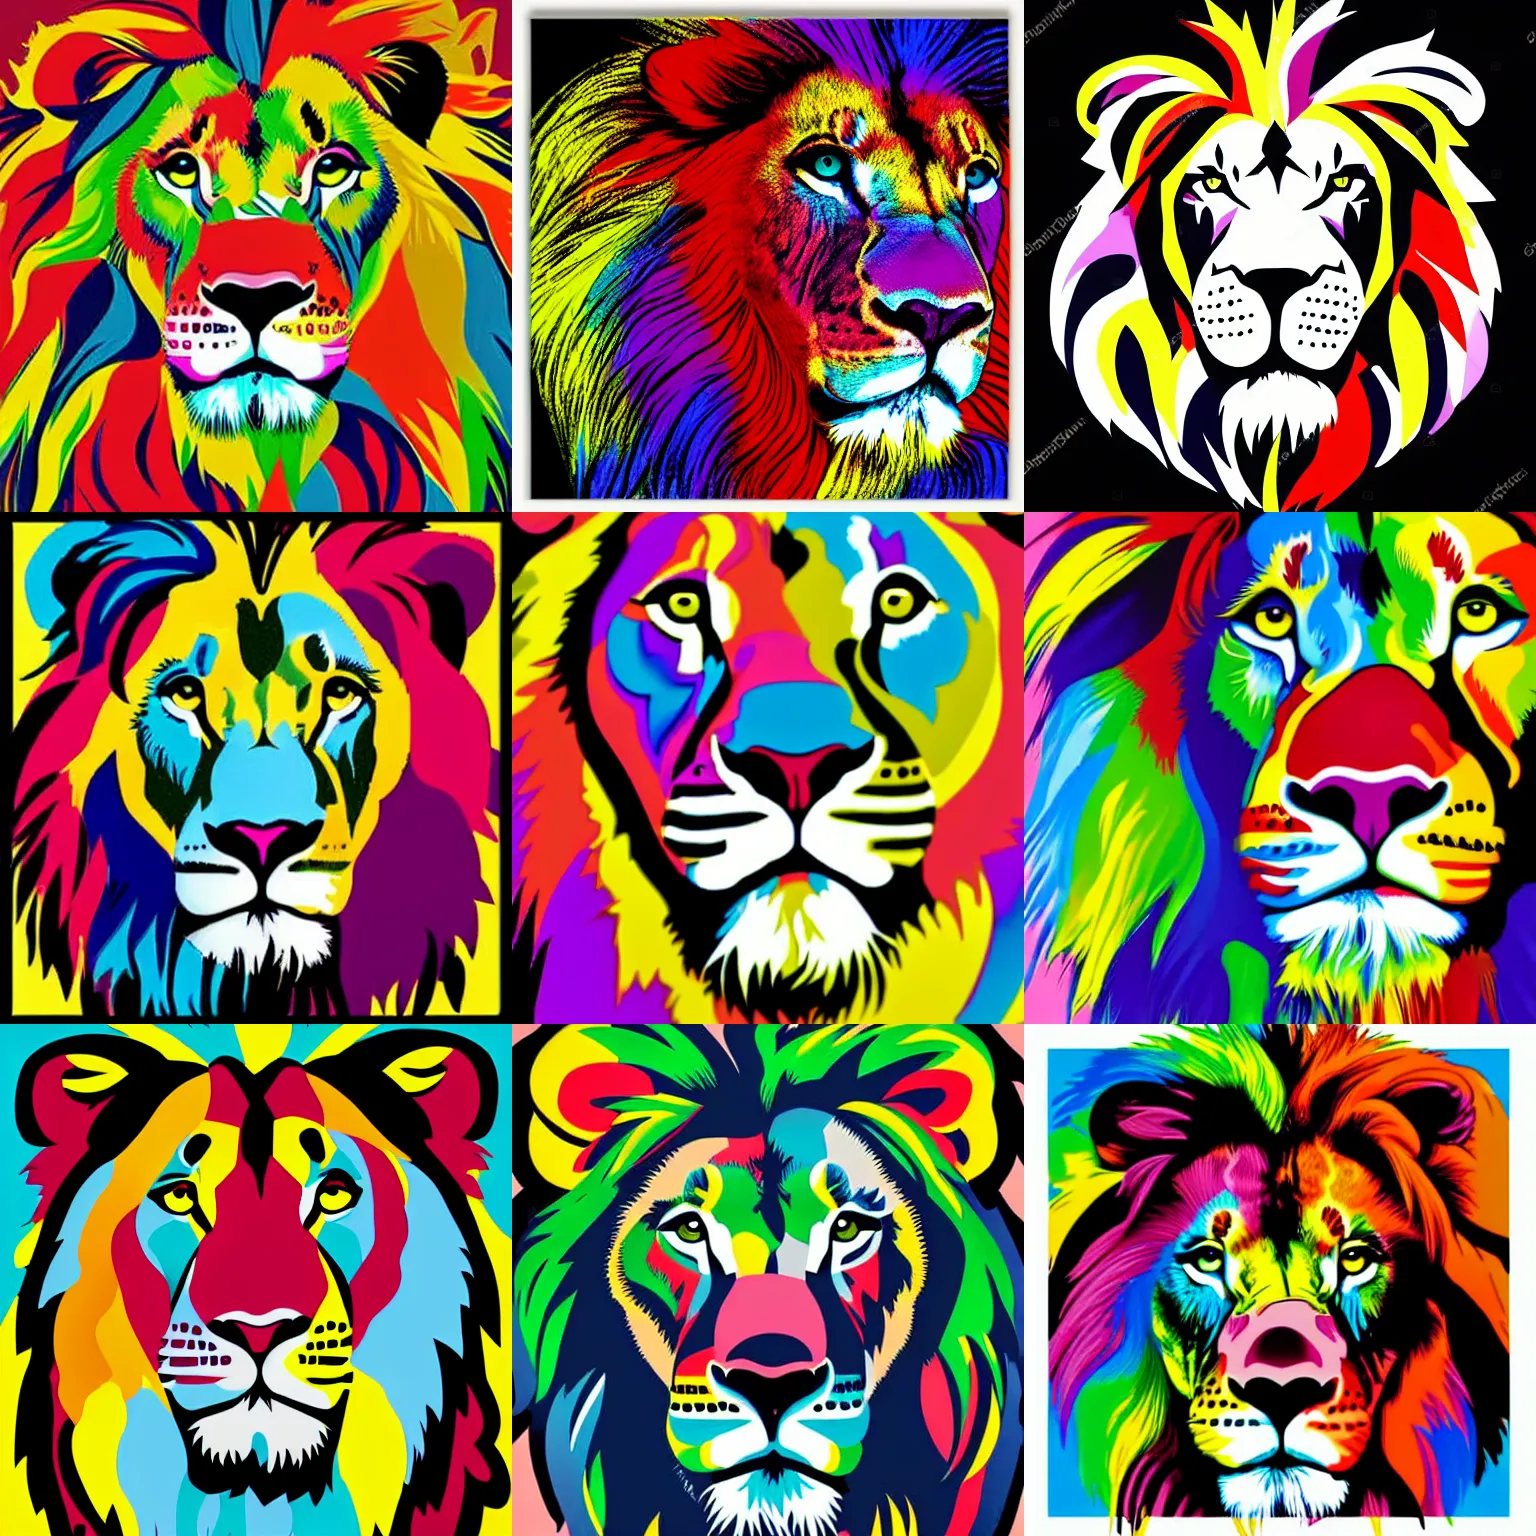 Prompt: colorful pop art of a Lion’s head, black background